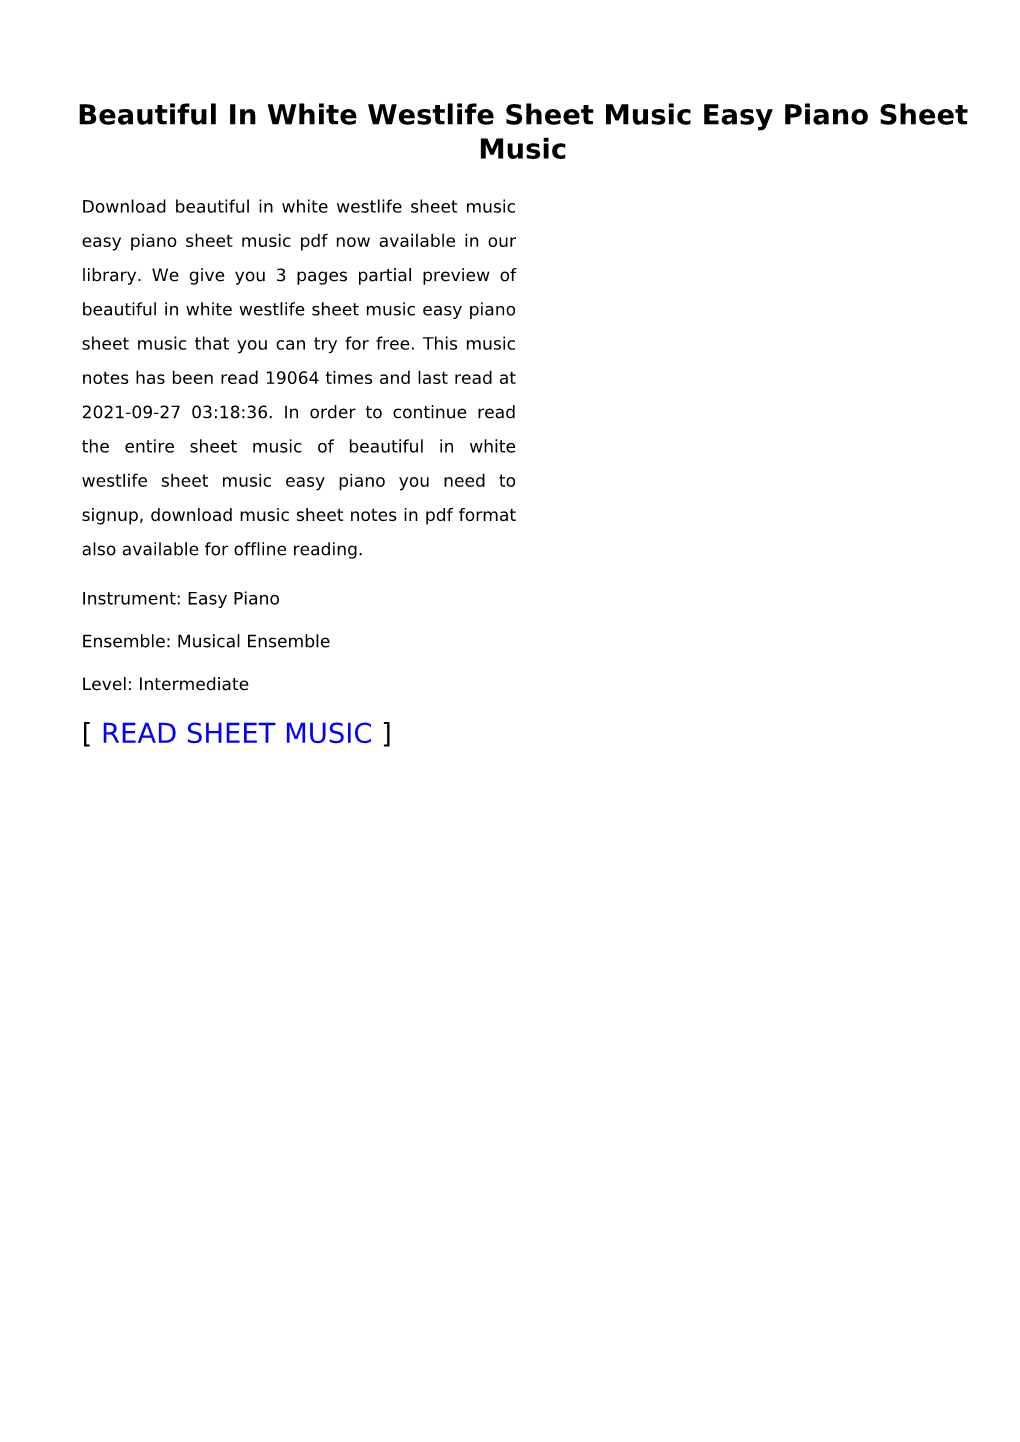 Beautiful in White Westlife Sheet Music Easy Piano Sheet Music